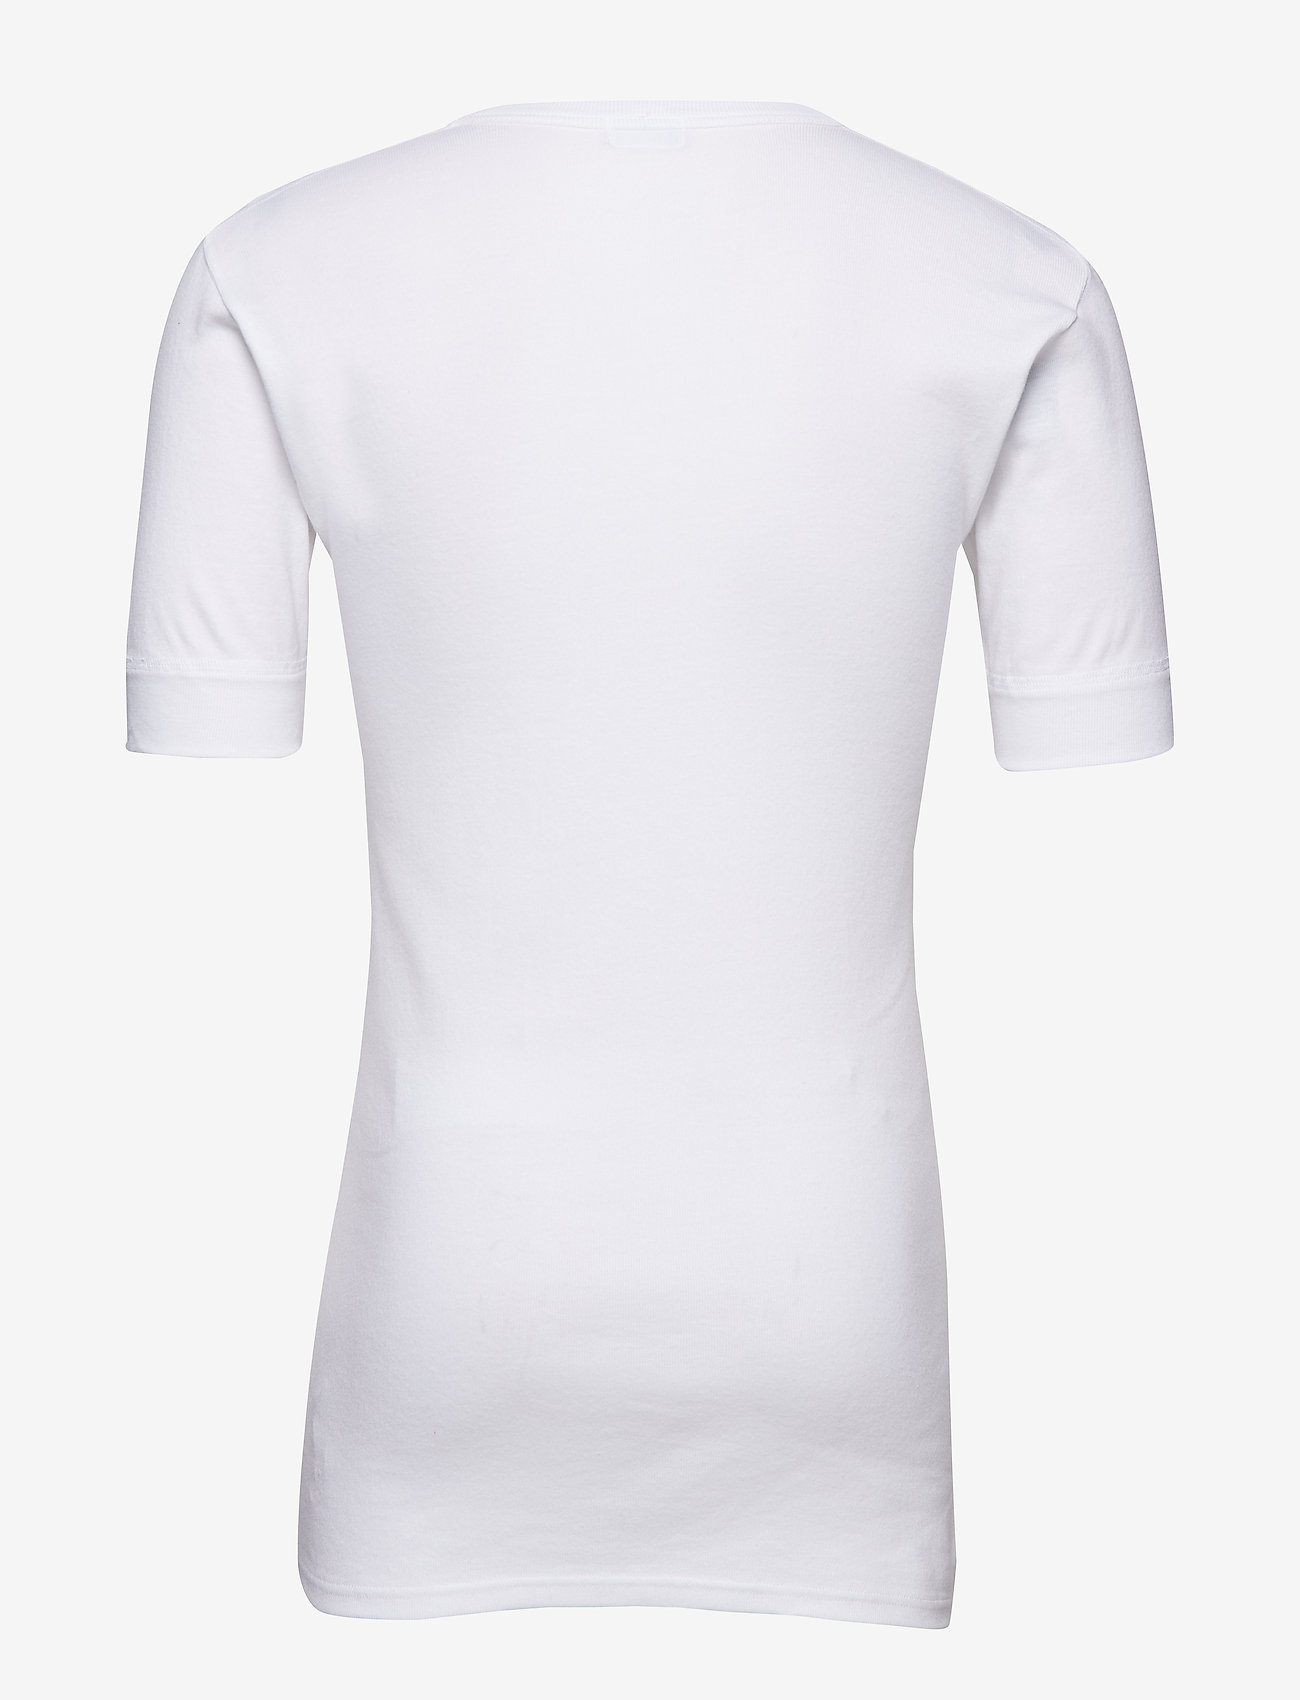 JBS - Original tee - t-shirts - white - 1